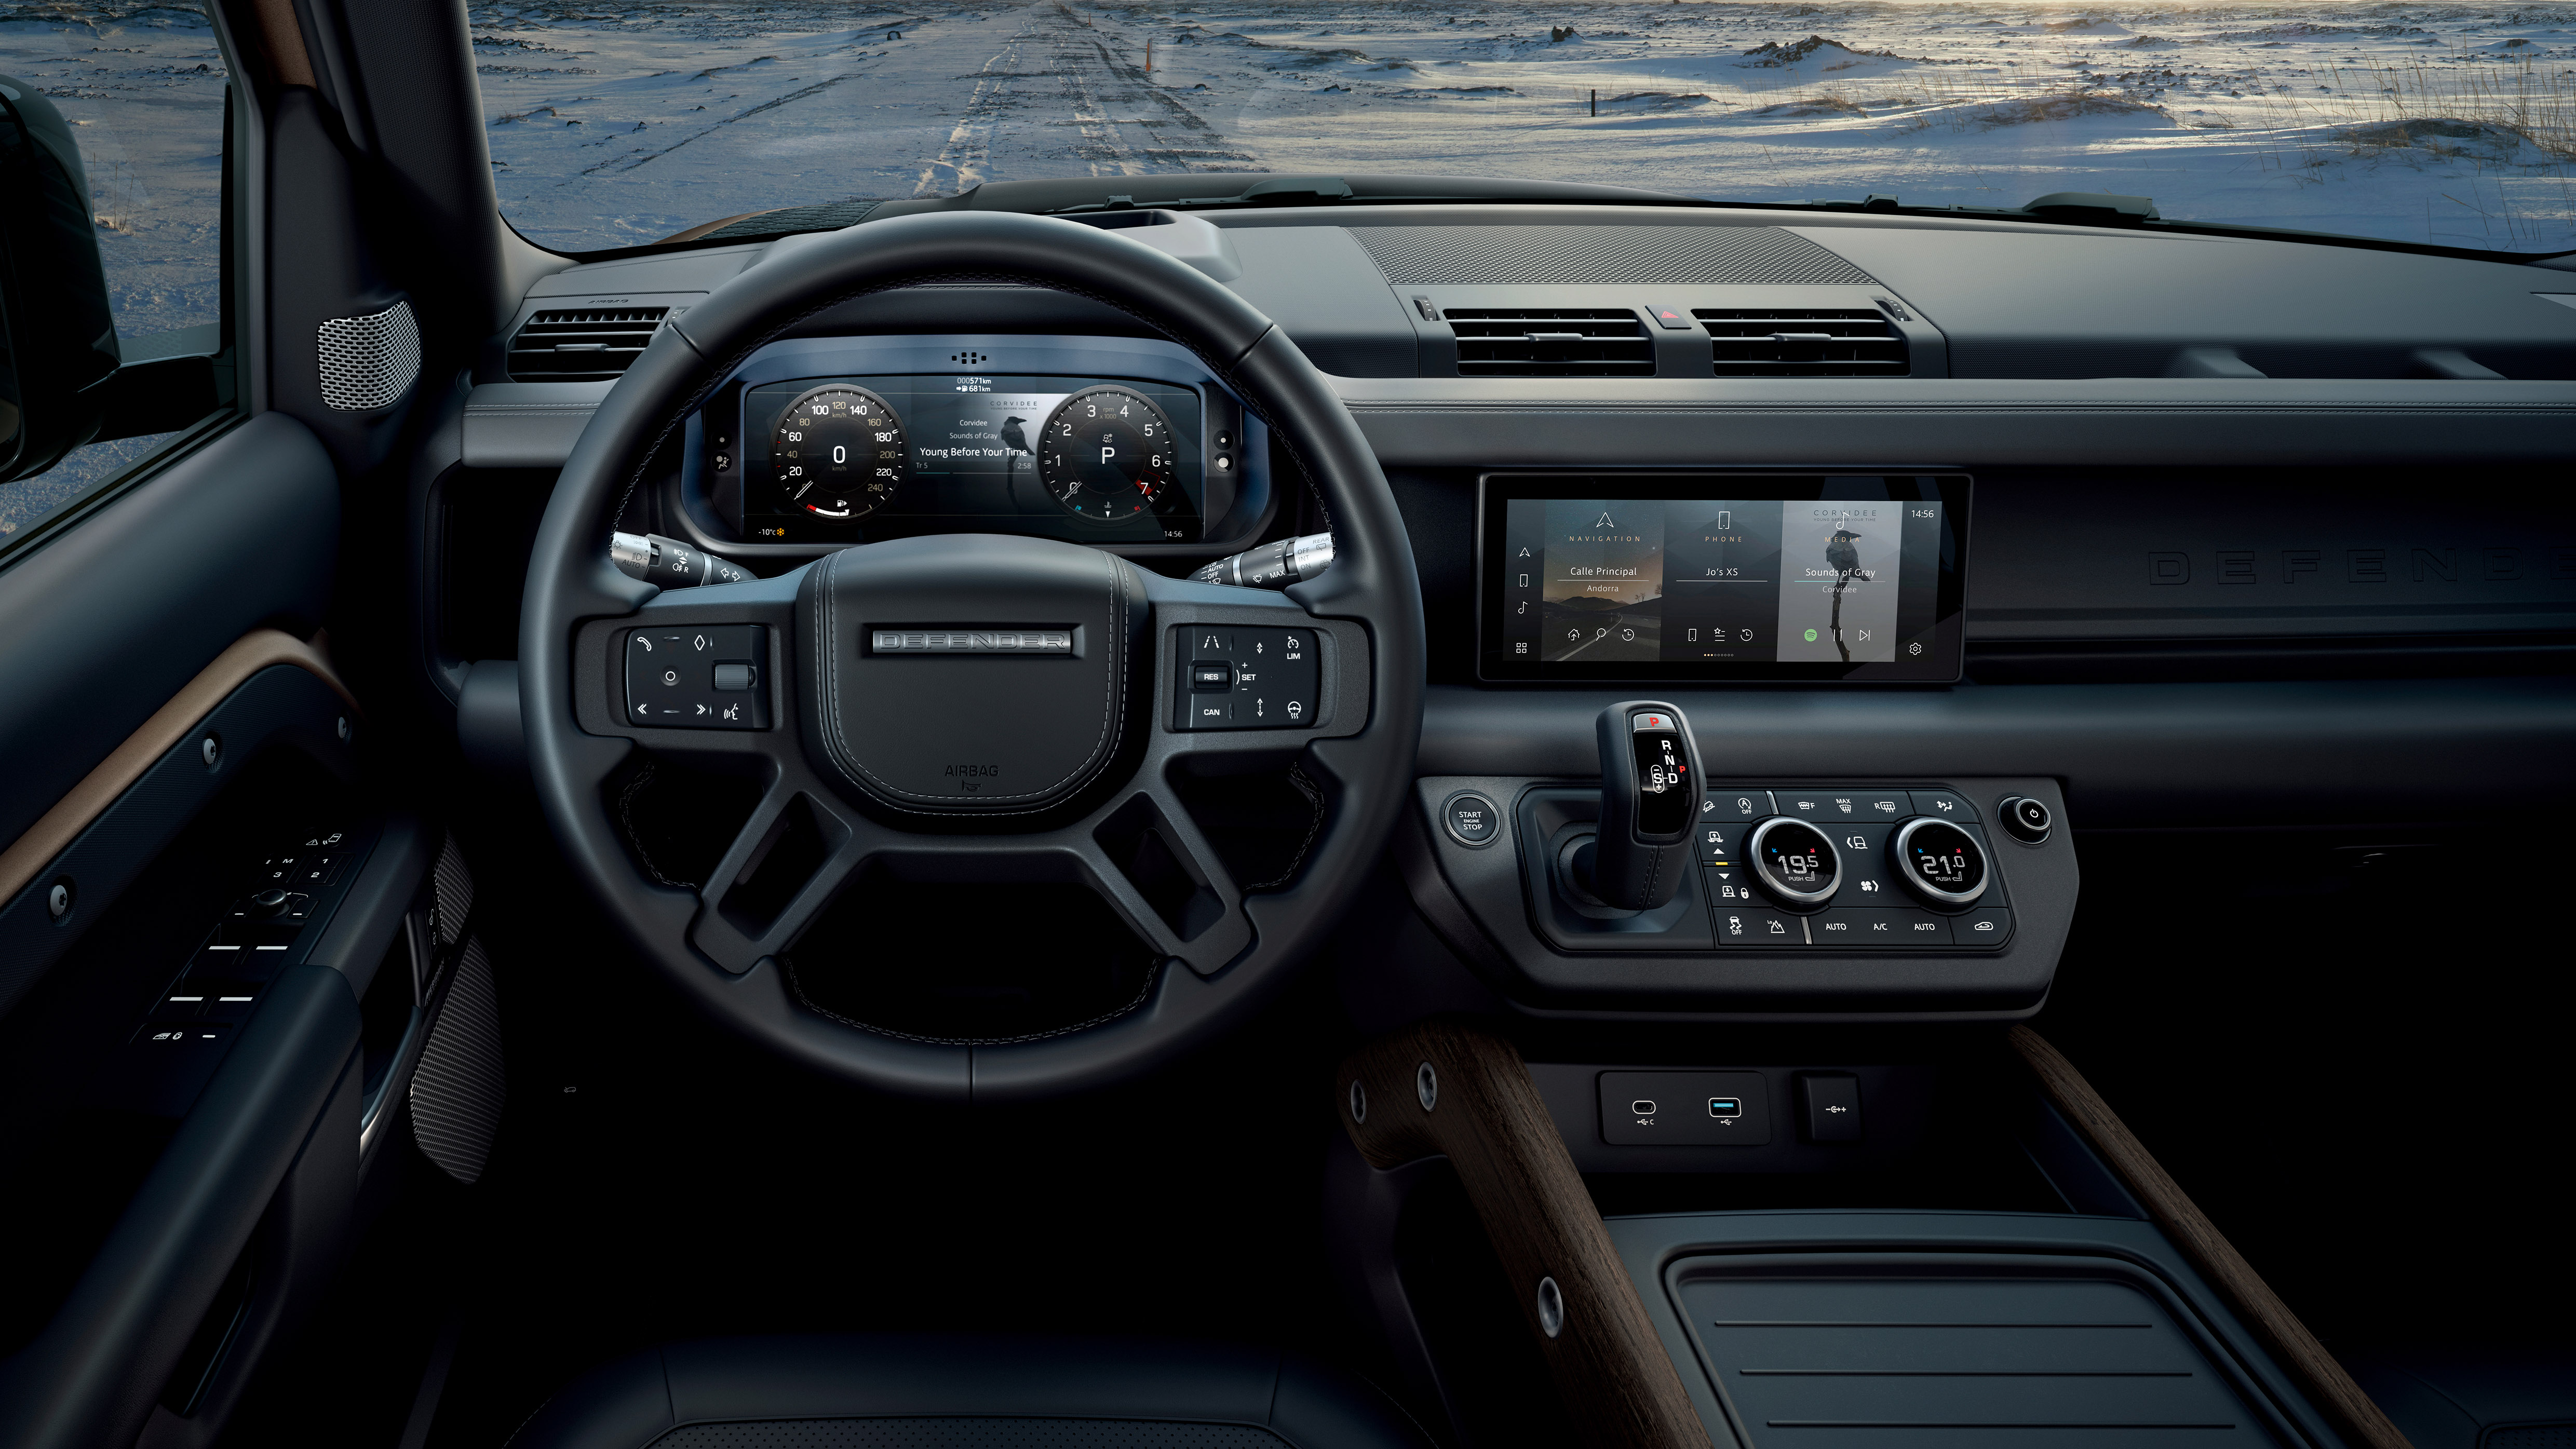 2020 Land Rover Defender Interior Photo Gallery Autoblog